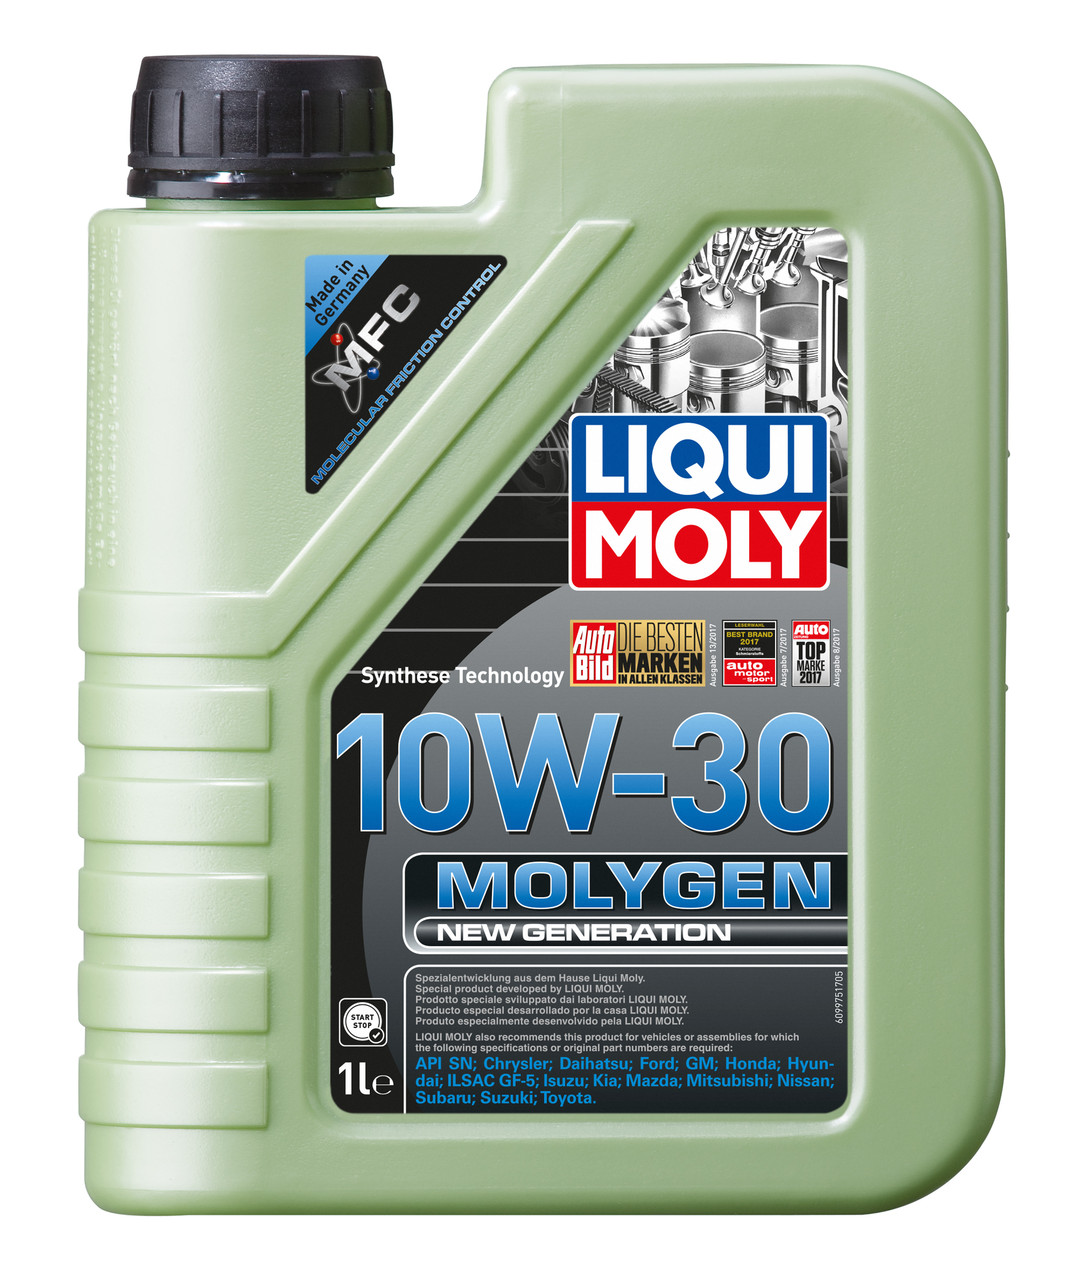 Моторное масло Molygen New Generation 10W-30, 1L, LIQUI MOLY